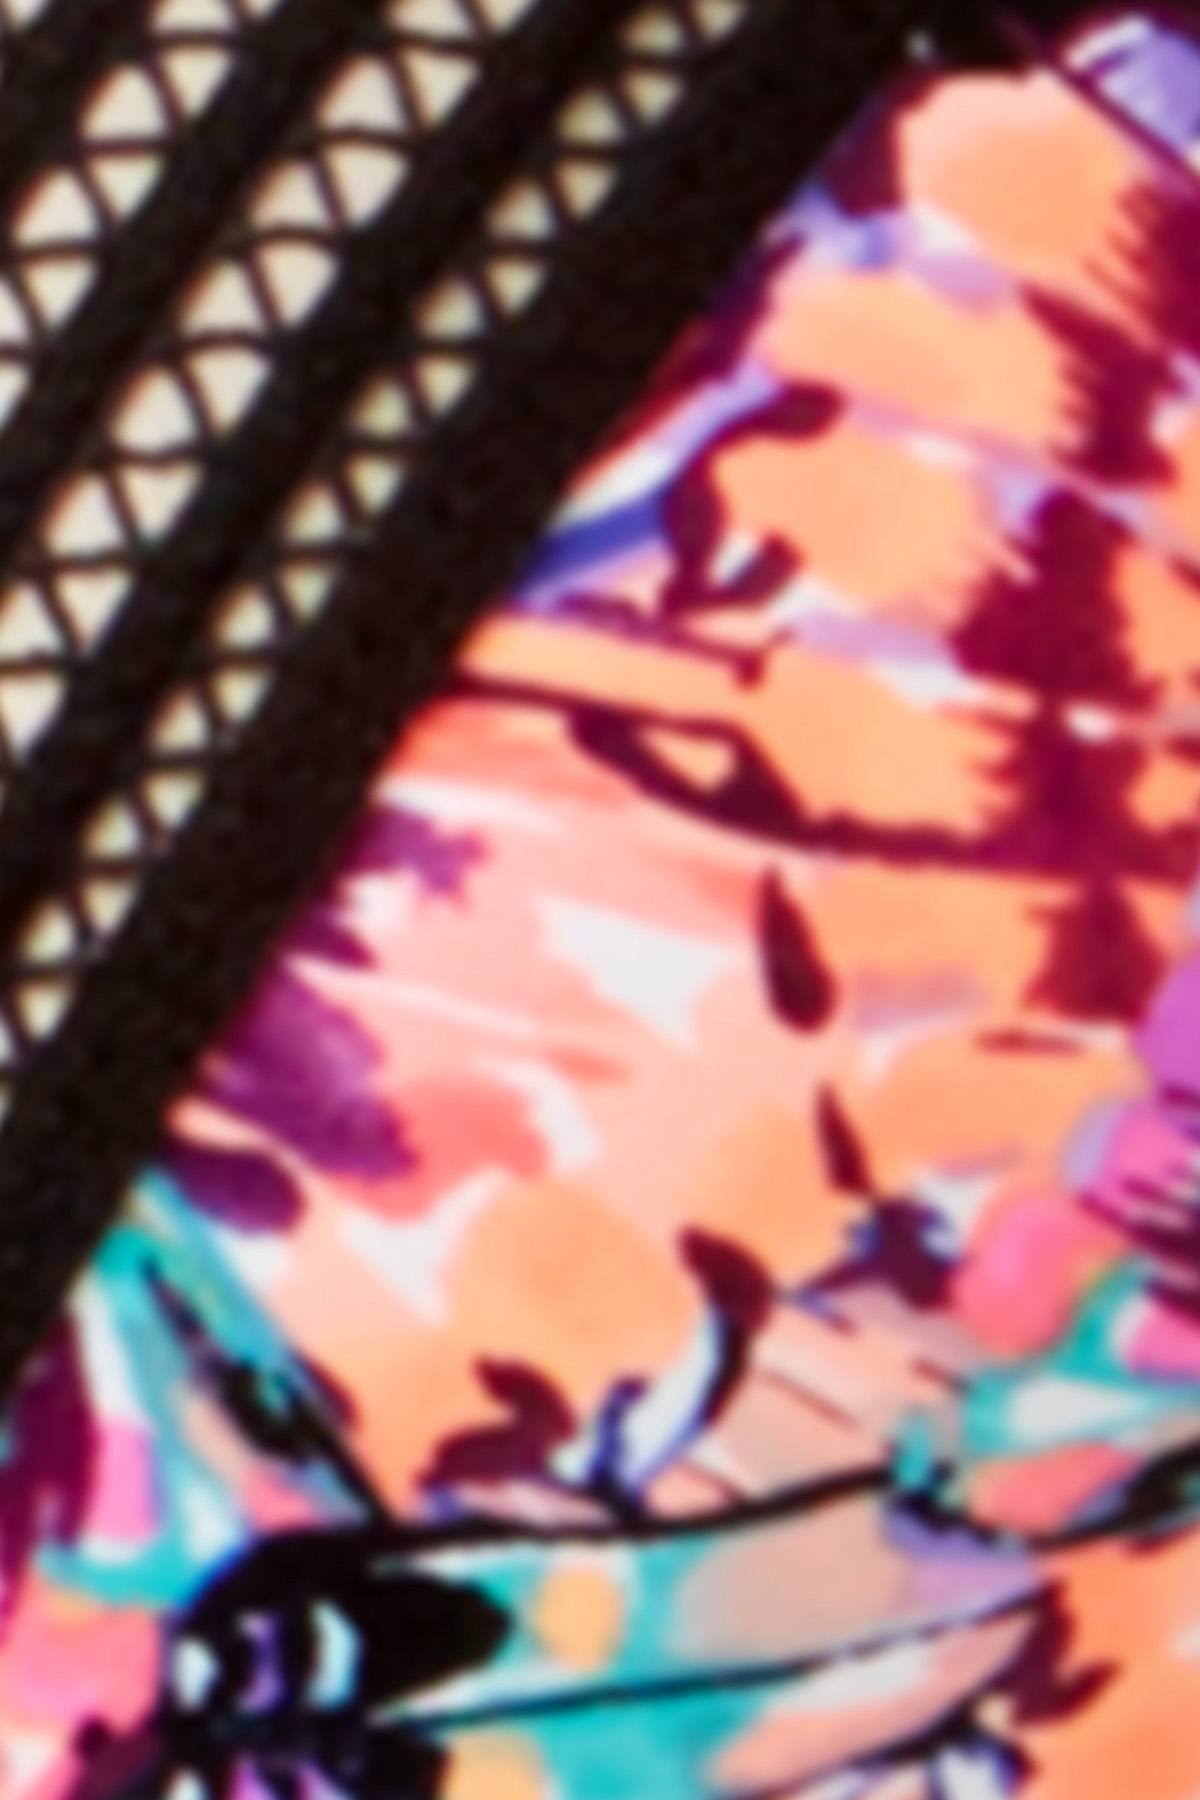 Body Glove Multicolor Baby Love Butterfly-Print Push-Up Triangle Bikini Top